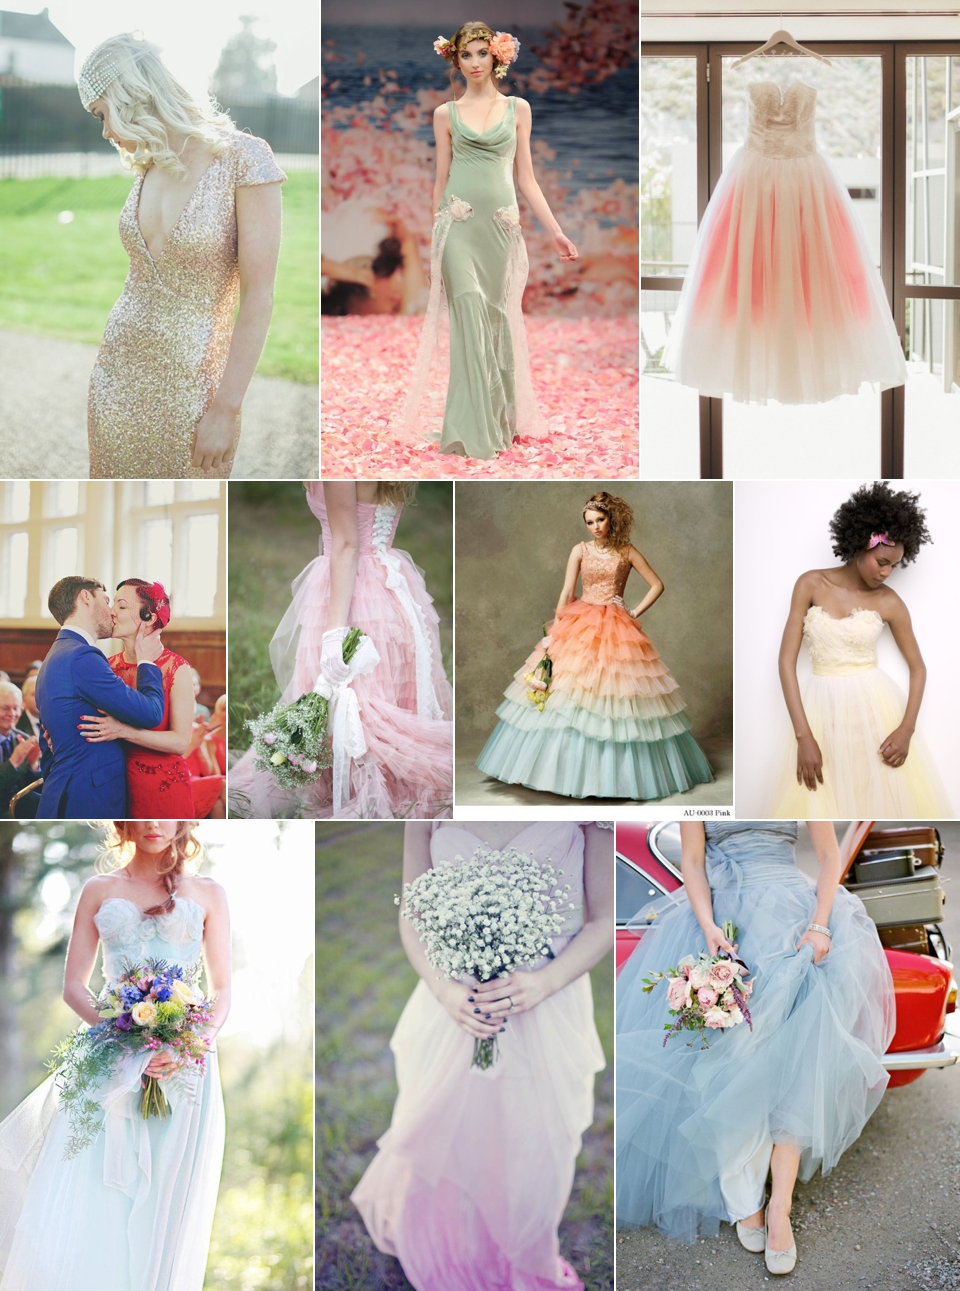 Colourful wedding dresses